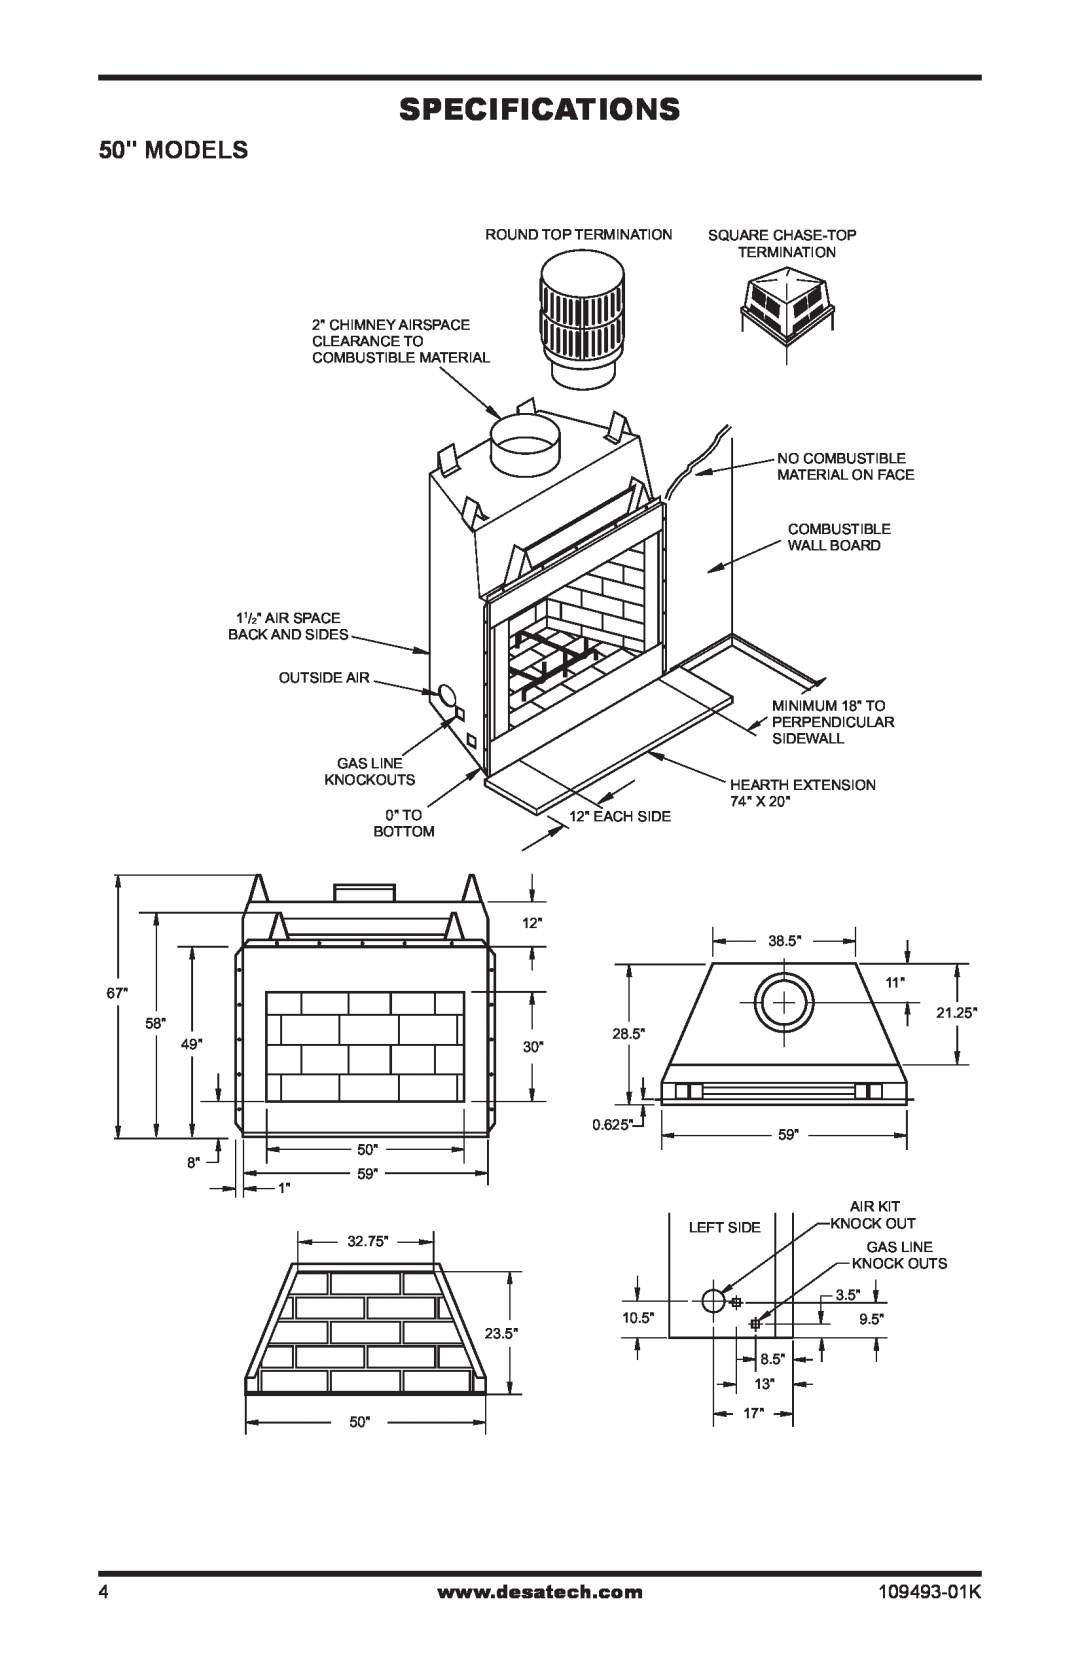 Desa ICBO# 3507 installation manual Specifications, Models 